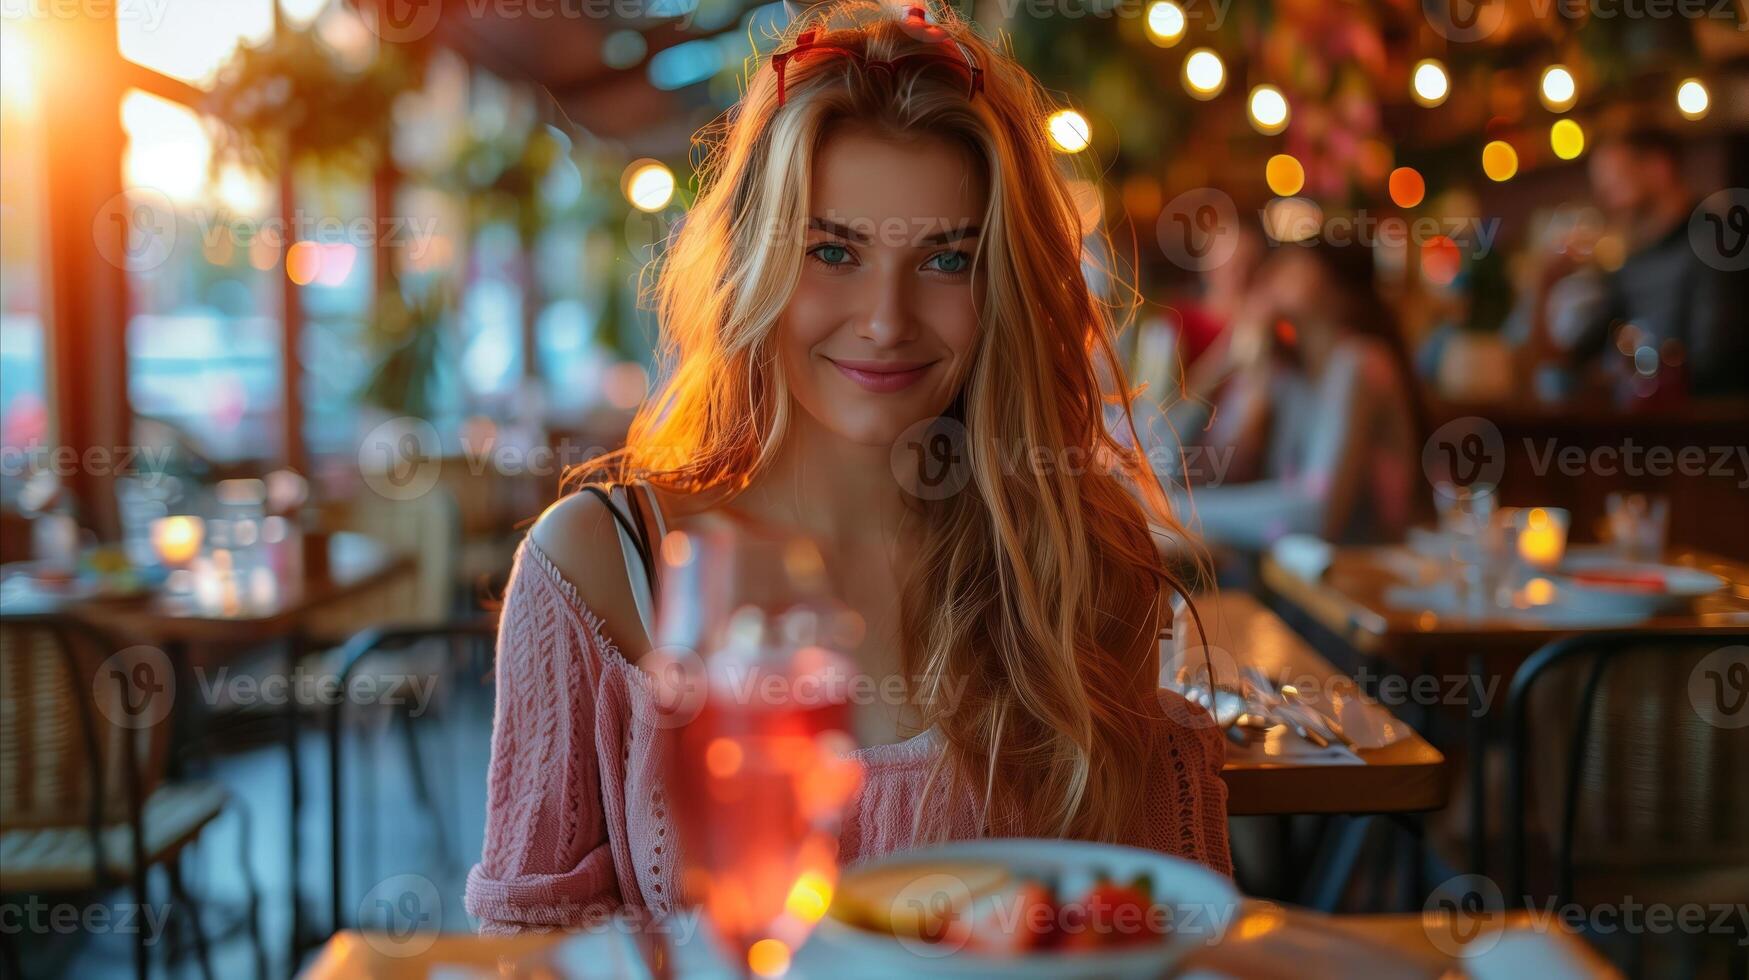 glimlachen vrouw genieten van avondeten Bij knus avond restaurant foto